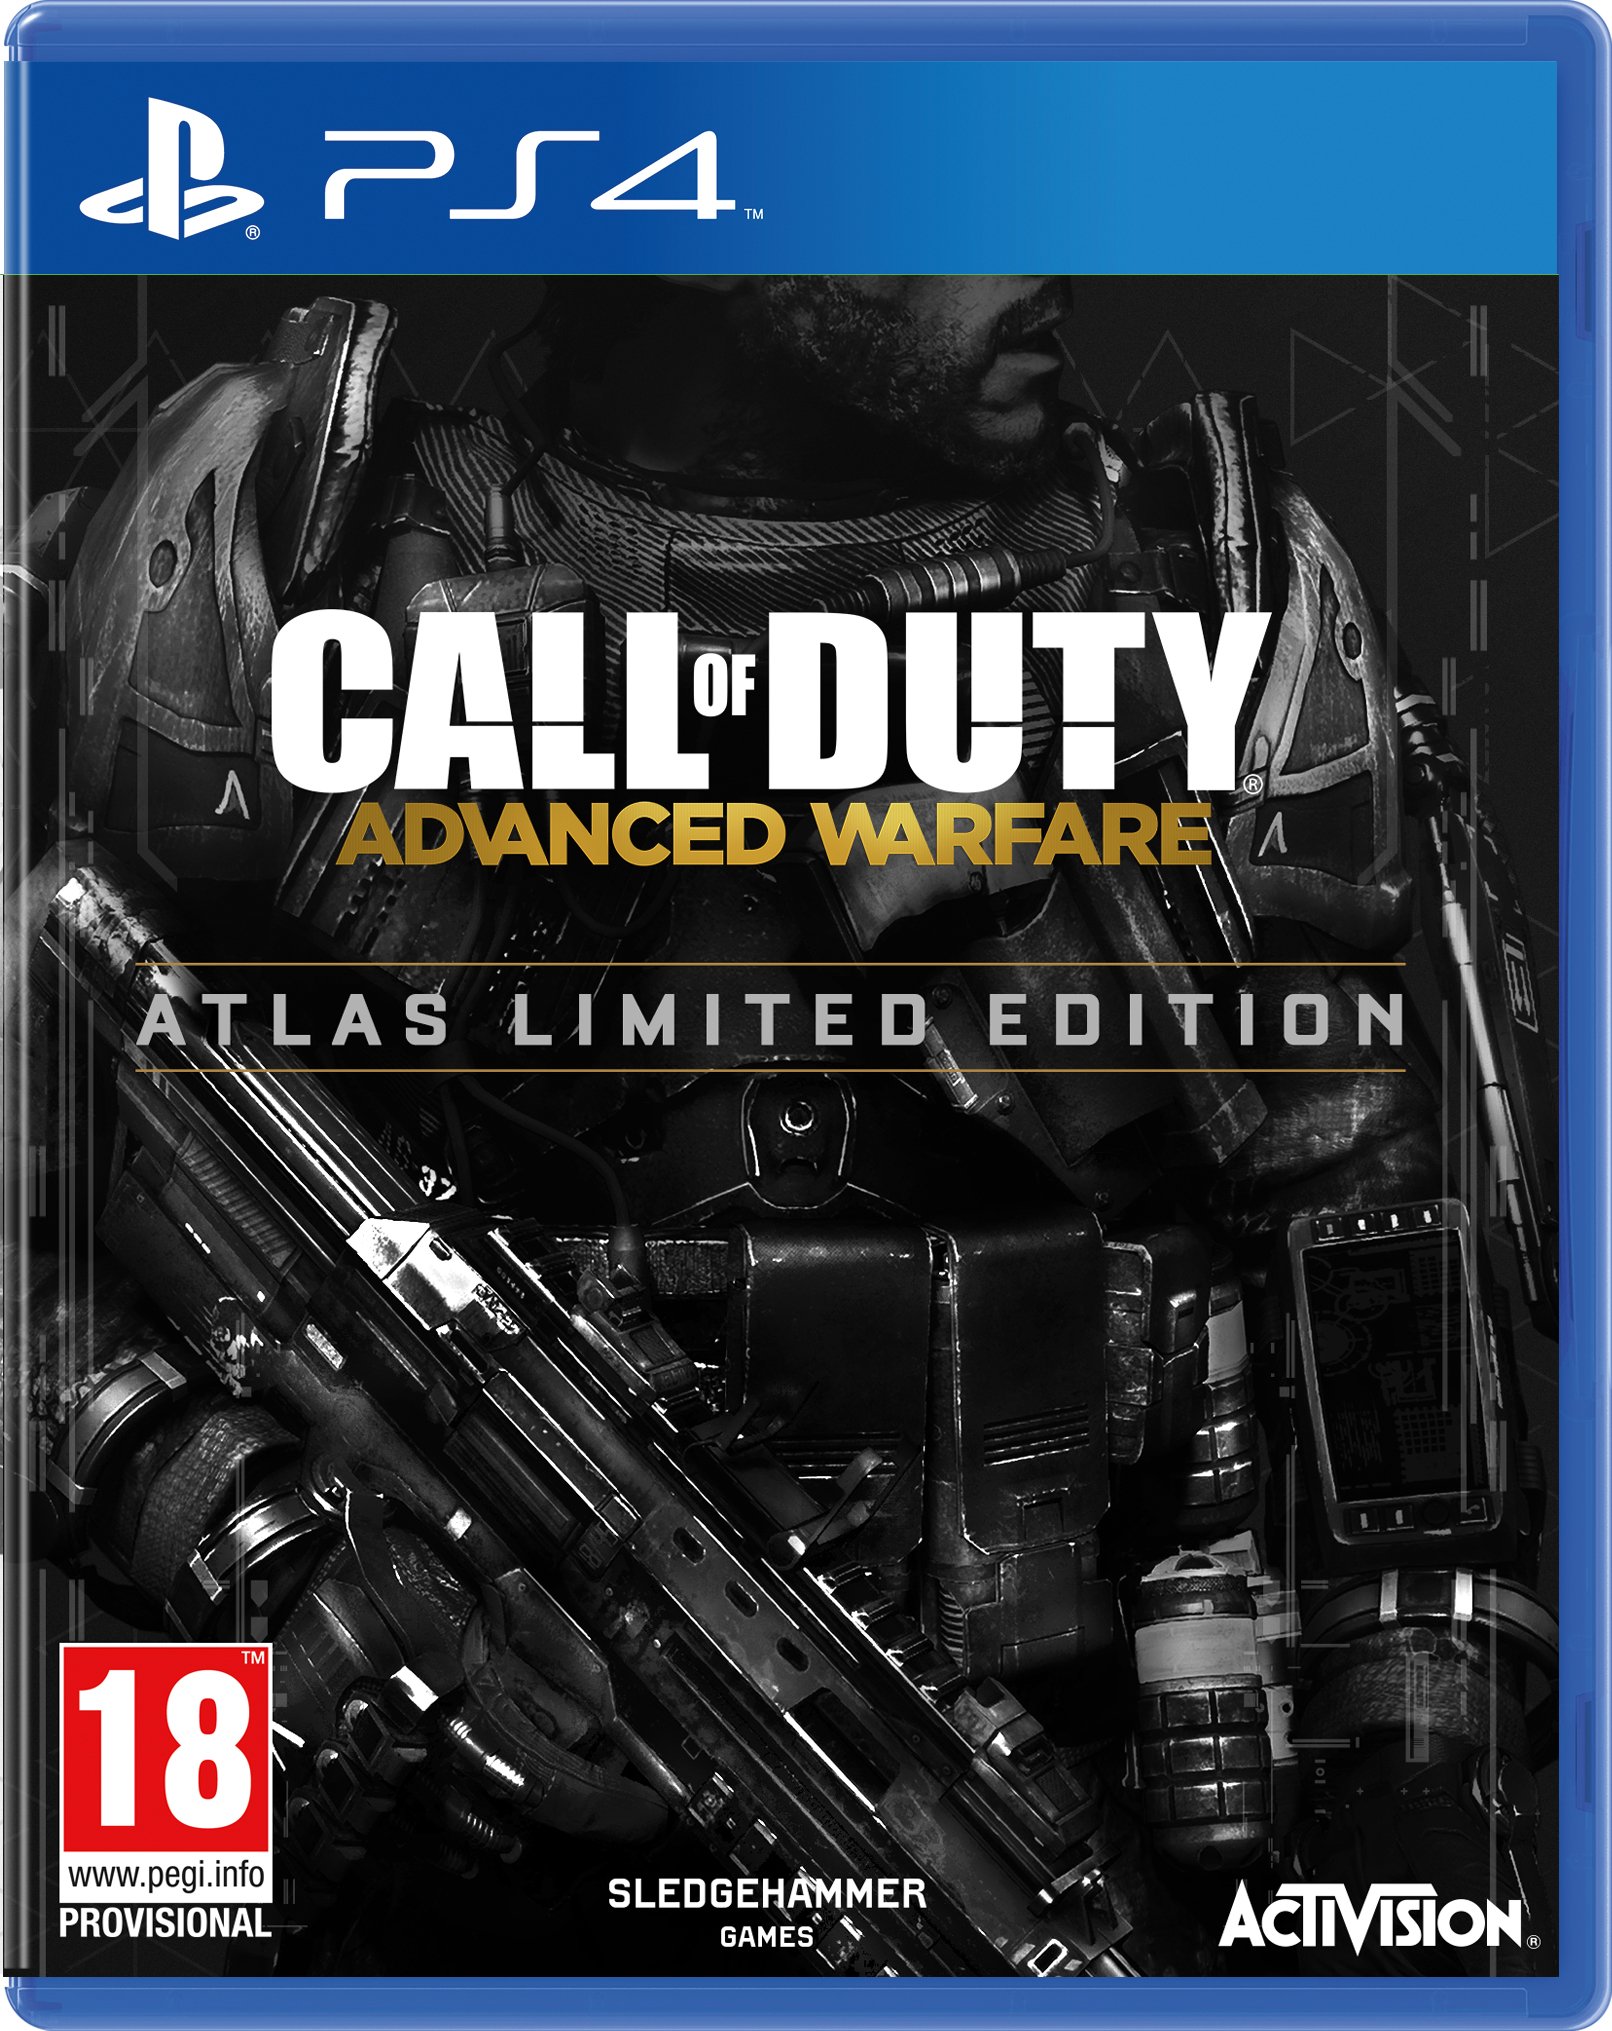 1027 - Call of Duty Advanced Warfare Atlas Limited Edition/